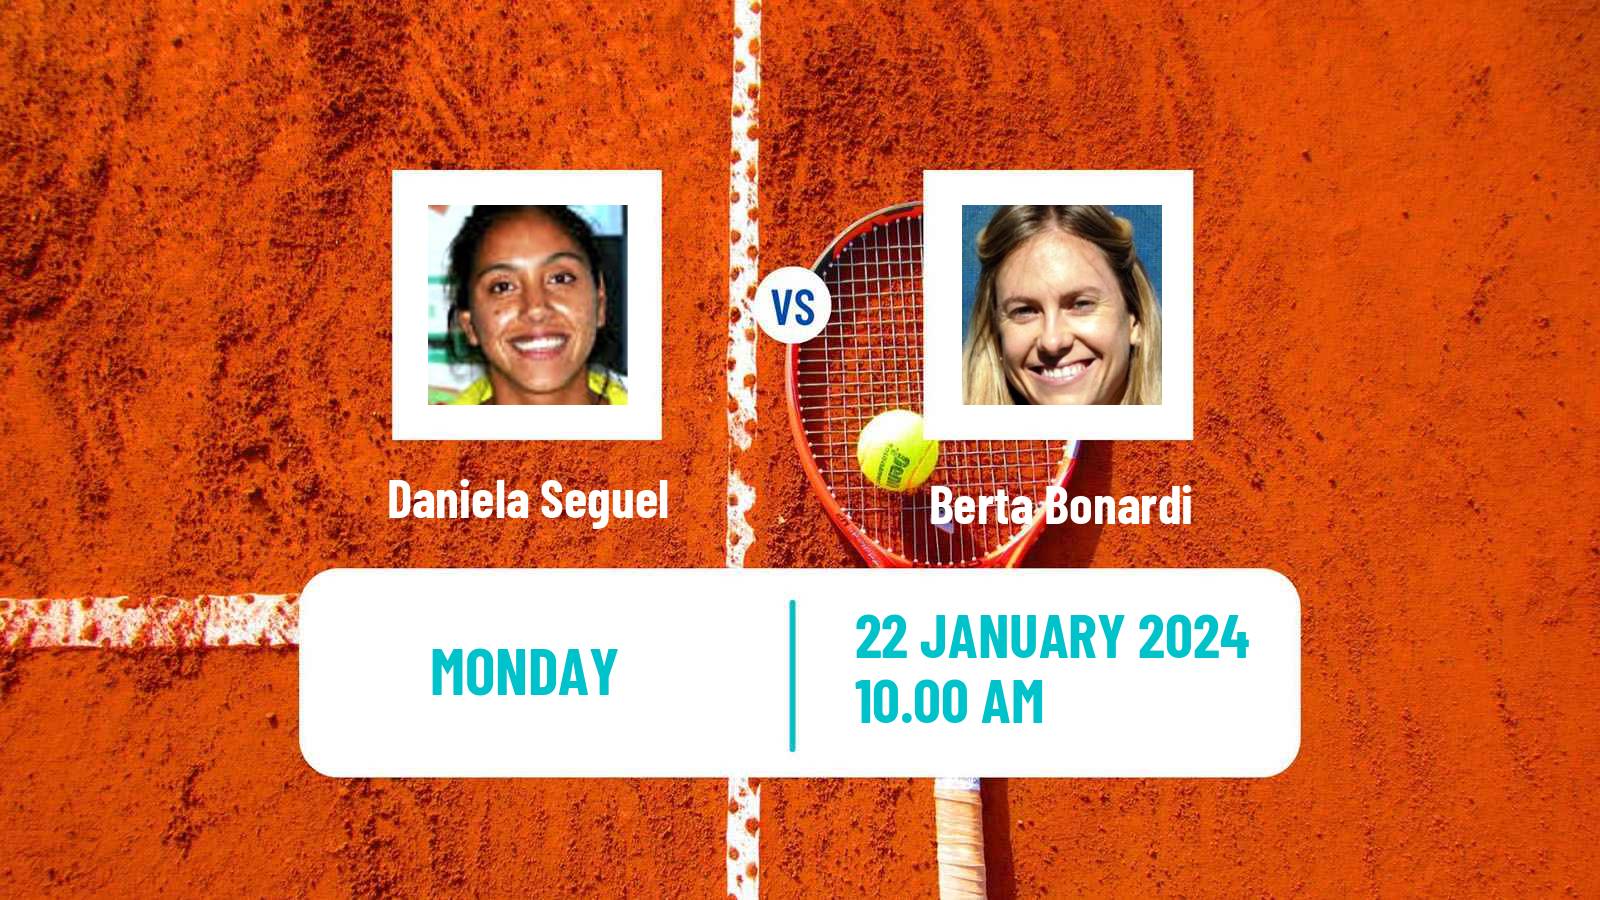 Tennis ITF W35 Buenos Aires 2 Women Daniela Seguel - Berta Bonardi